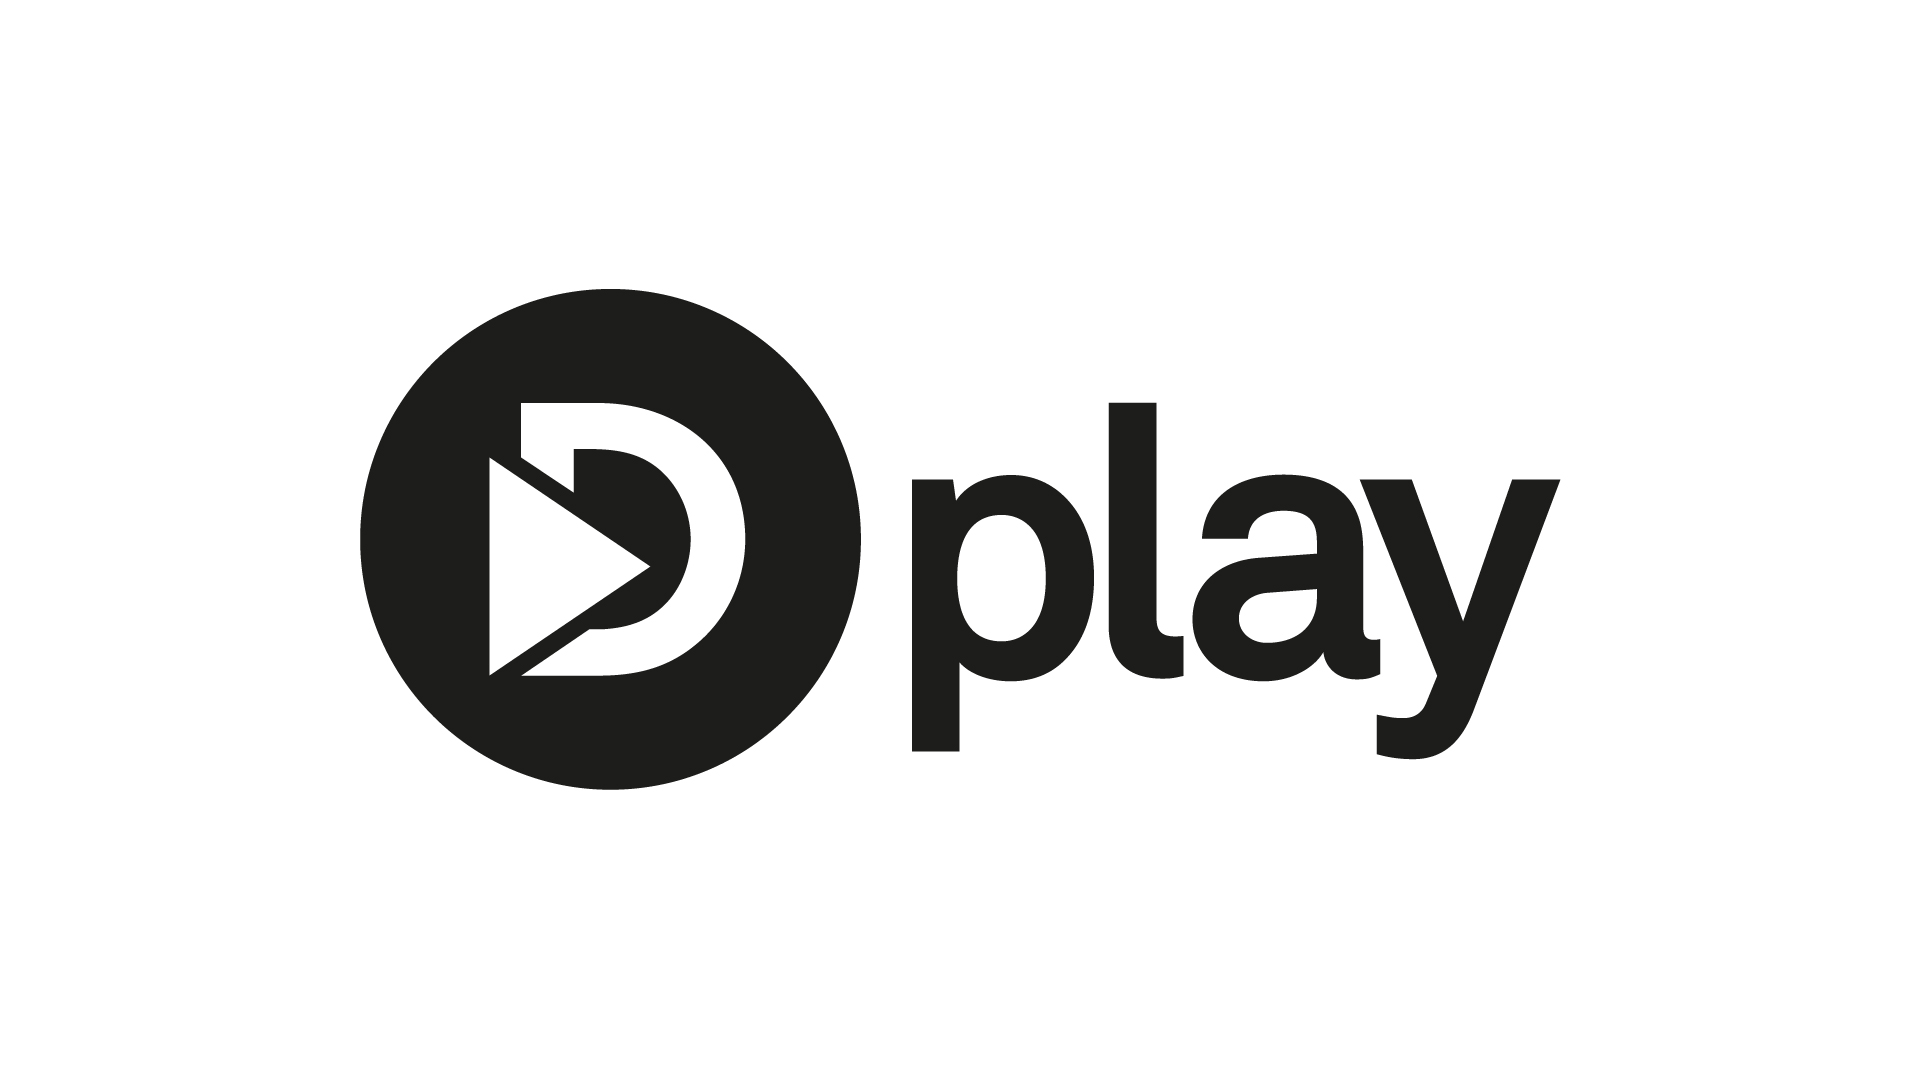 1 play site. Dplay. Плей лого. Интересный логотип плей. ND Play логотип.